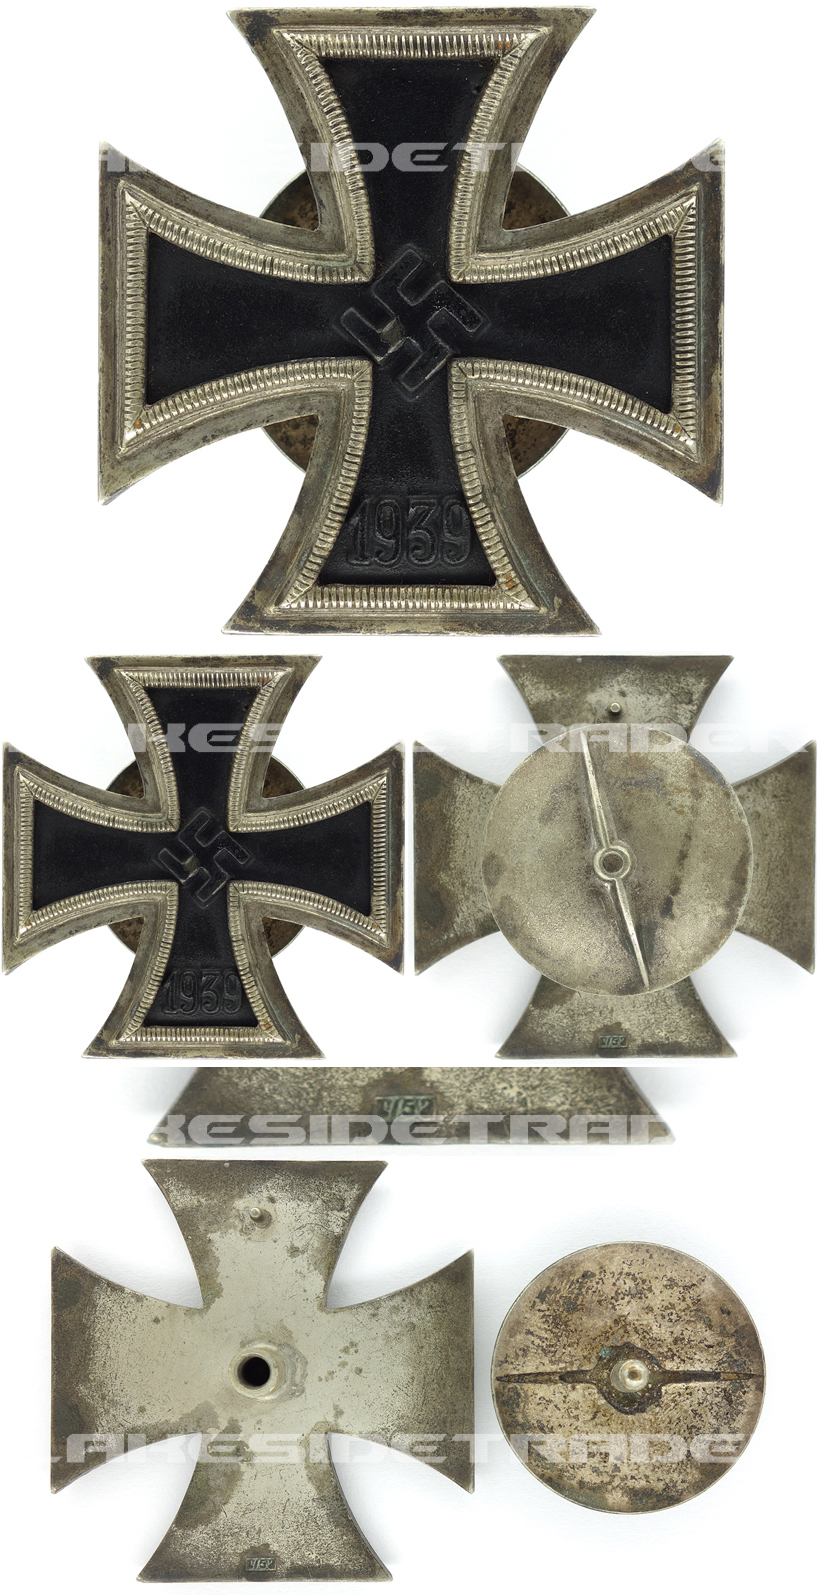 1st Class Iron Cross by L/53